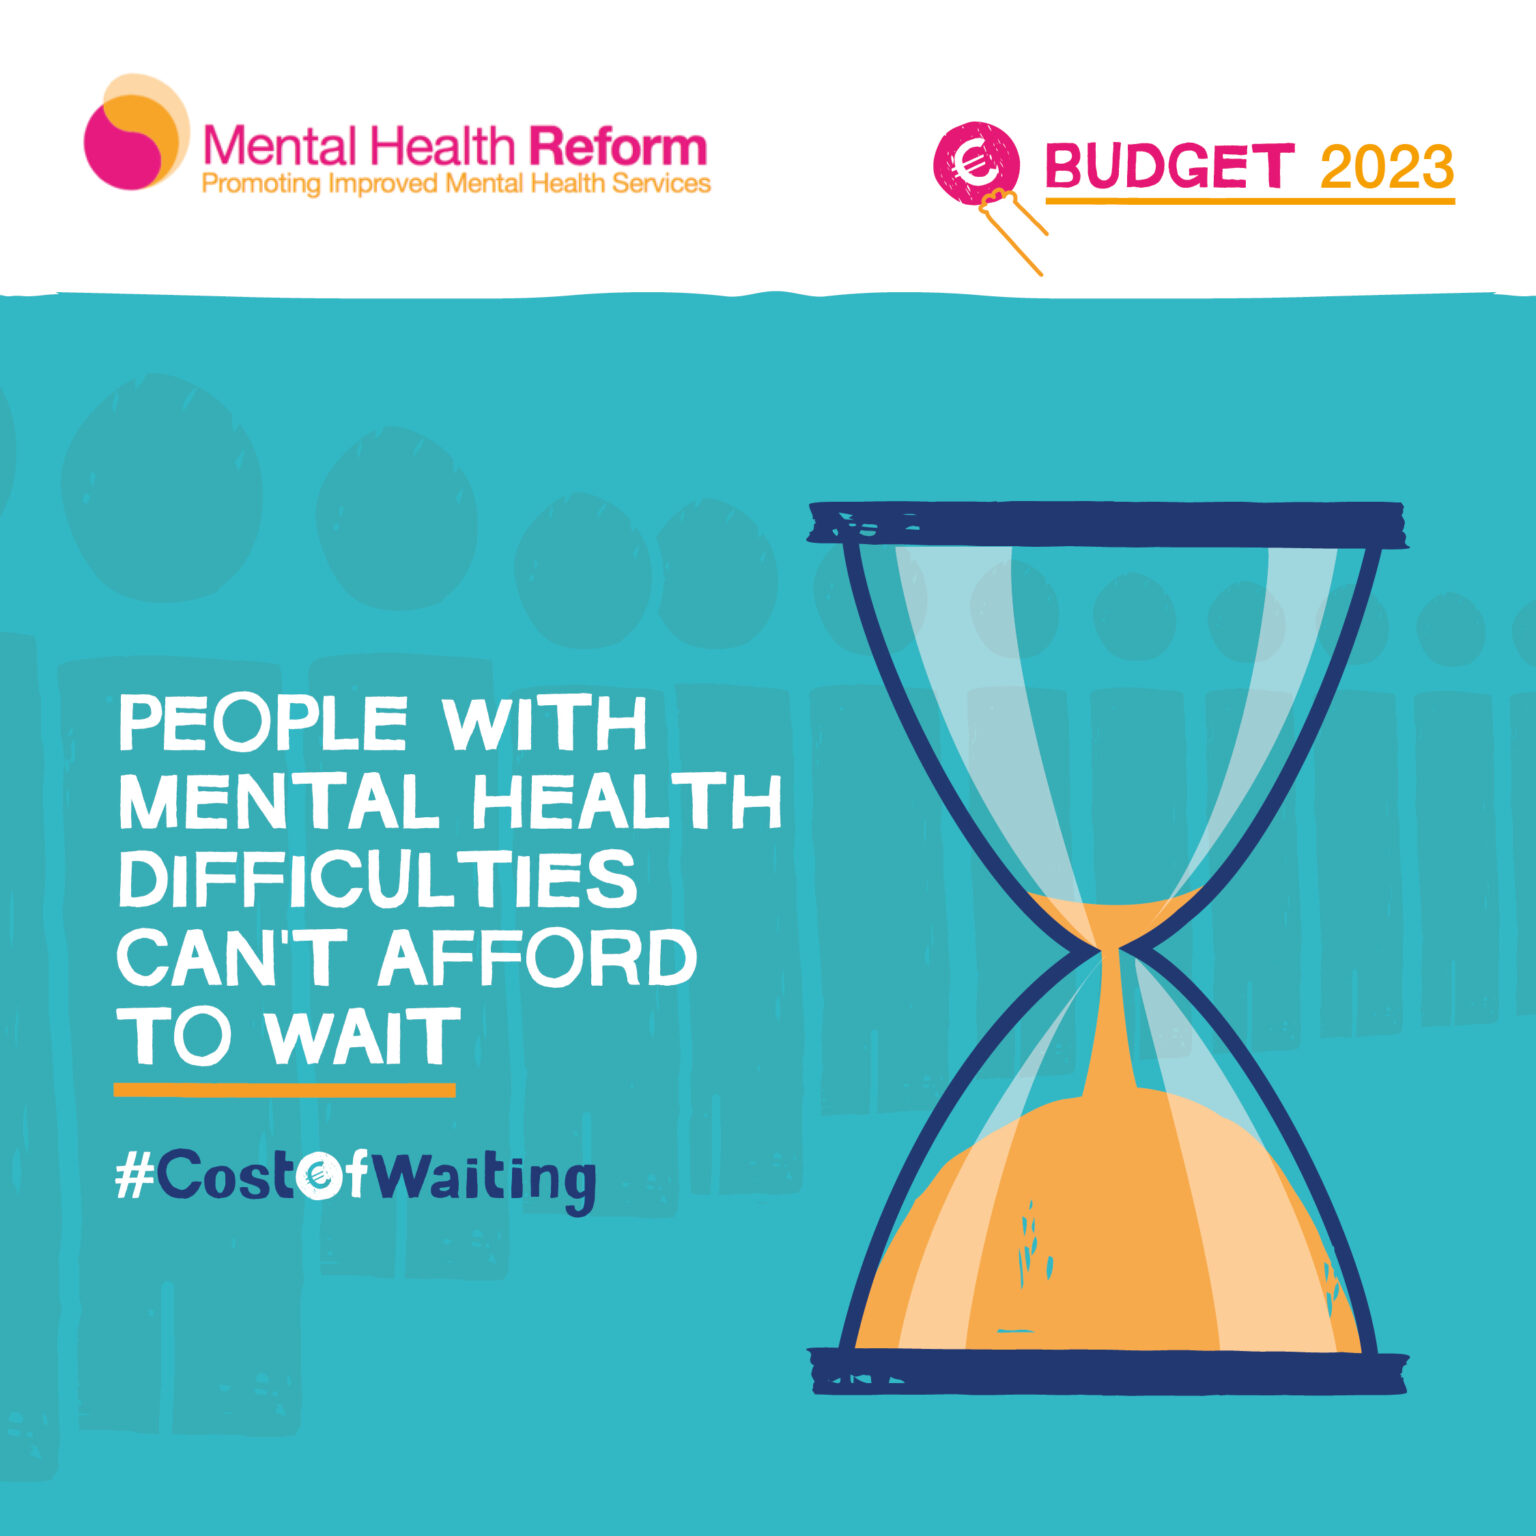 Budget 2023 Mental Health Reform